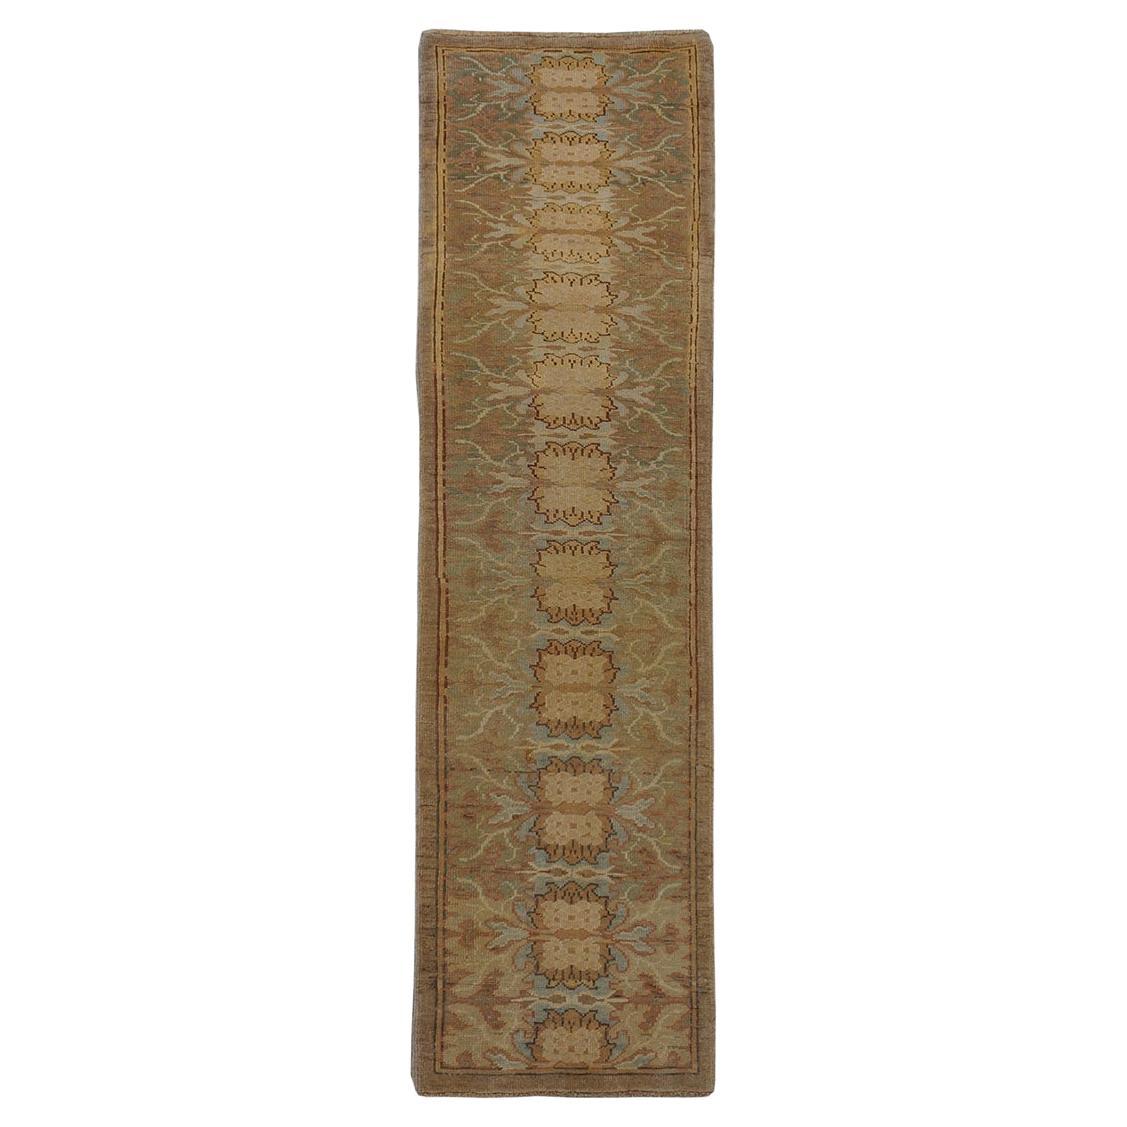 21st Century William Morris Donegal Carpet 3x10 Tan, Blue & Ivory Hall Runner For Sale